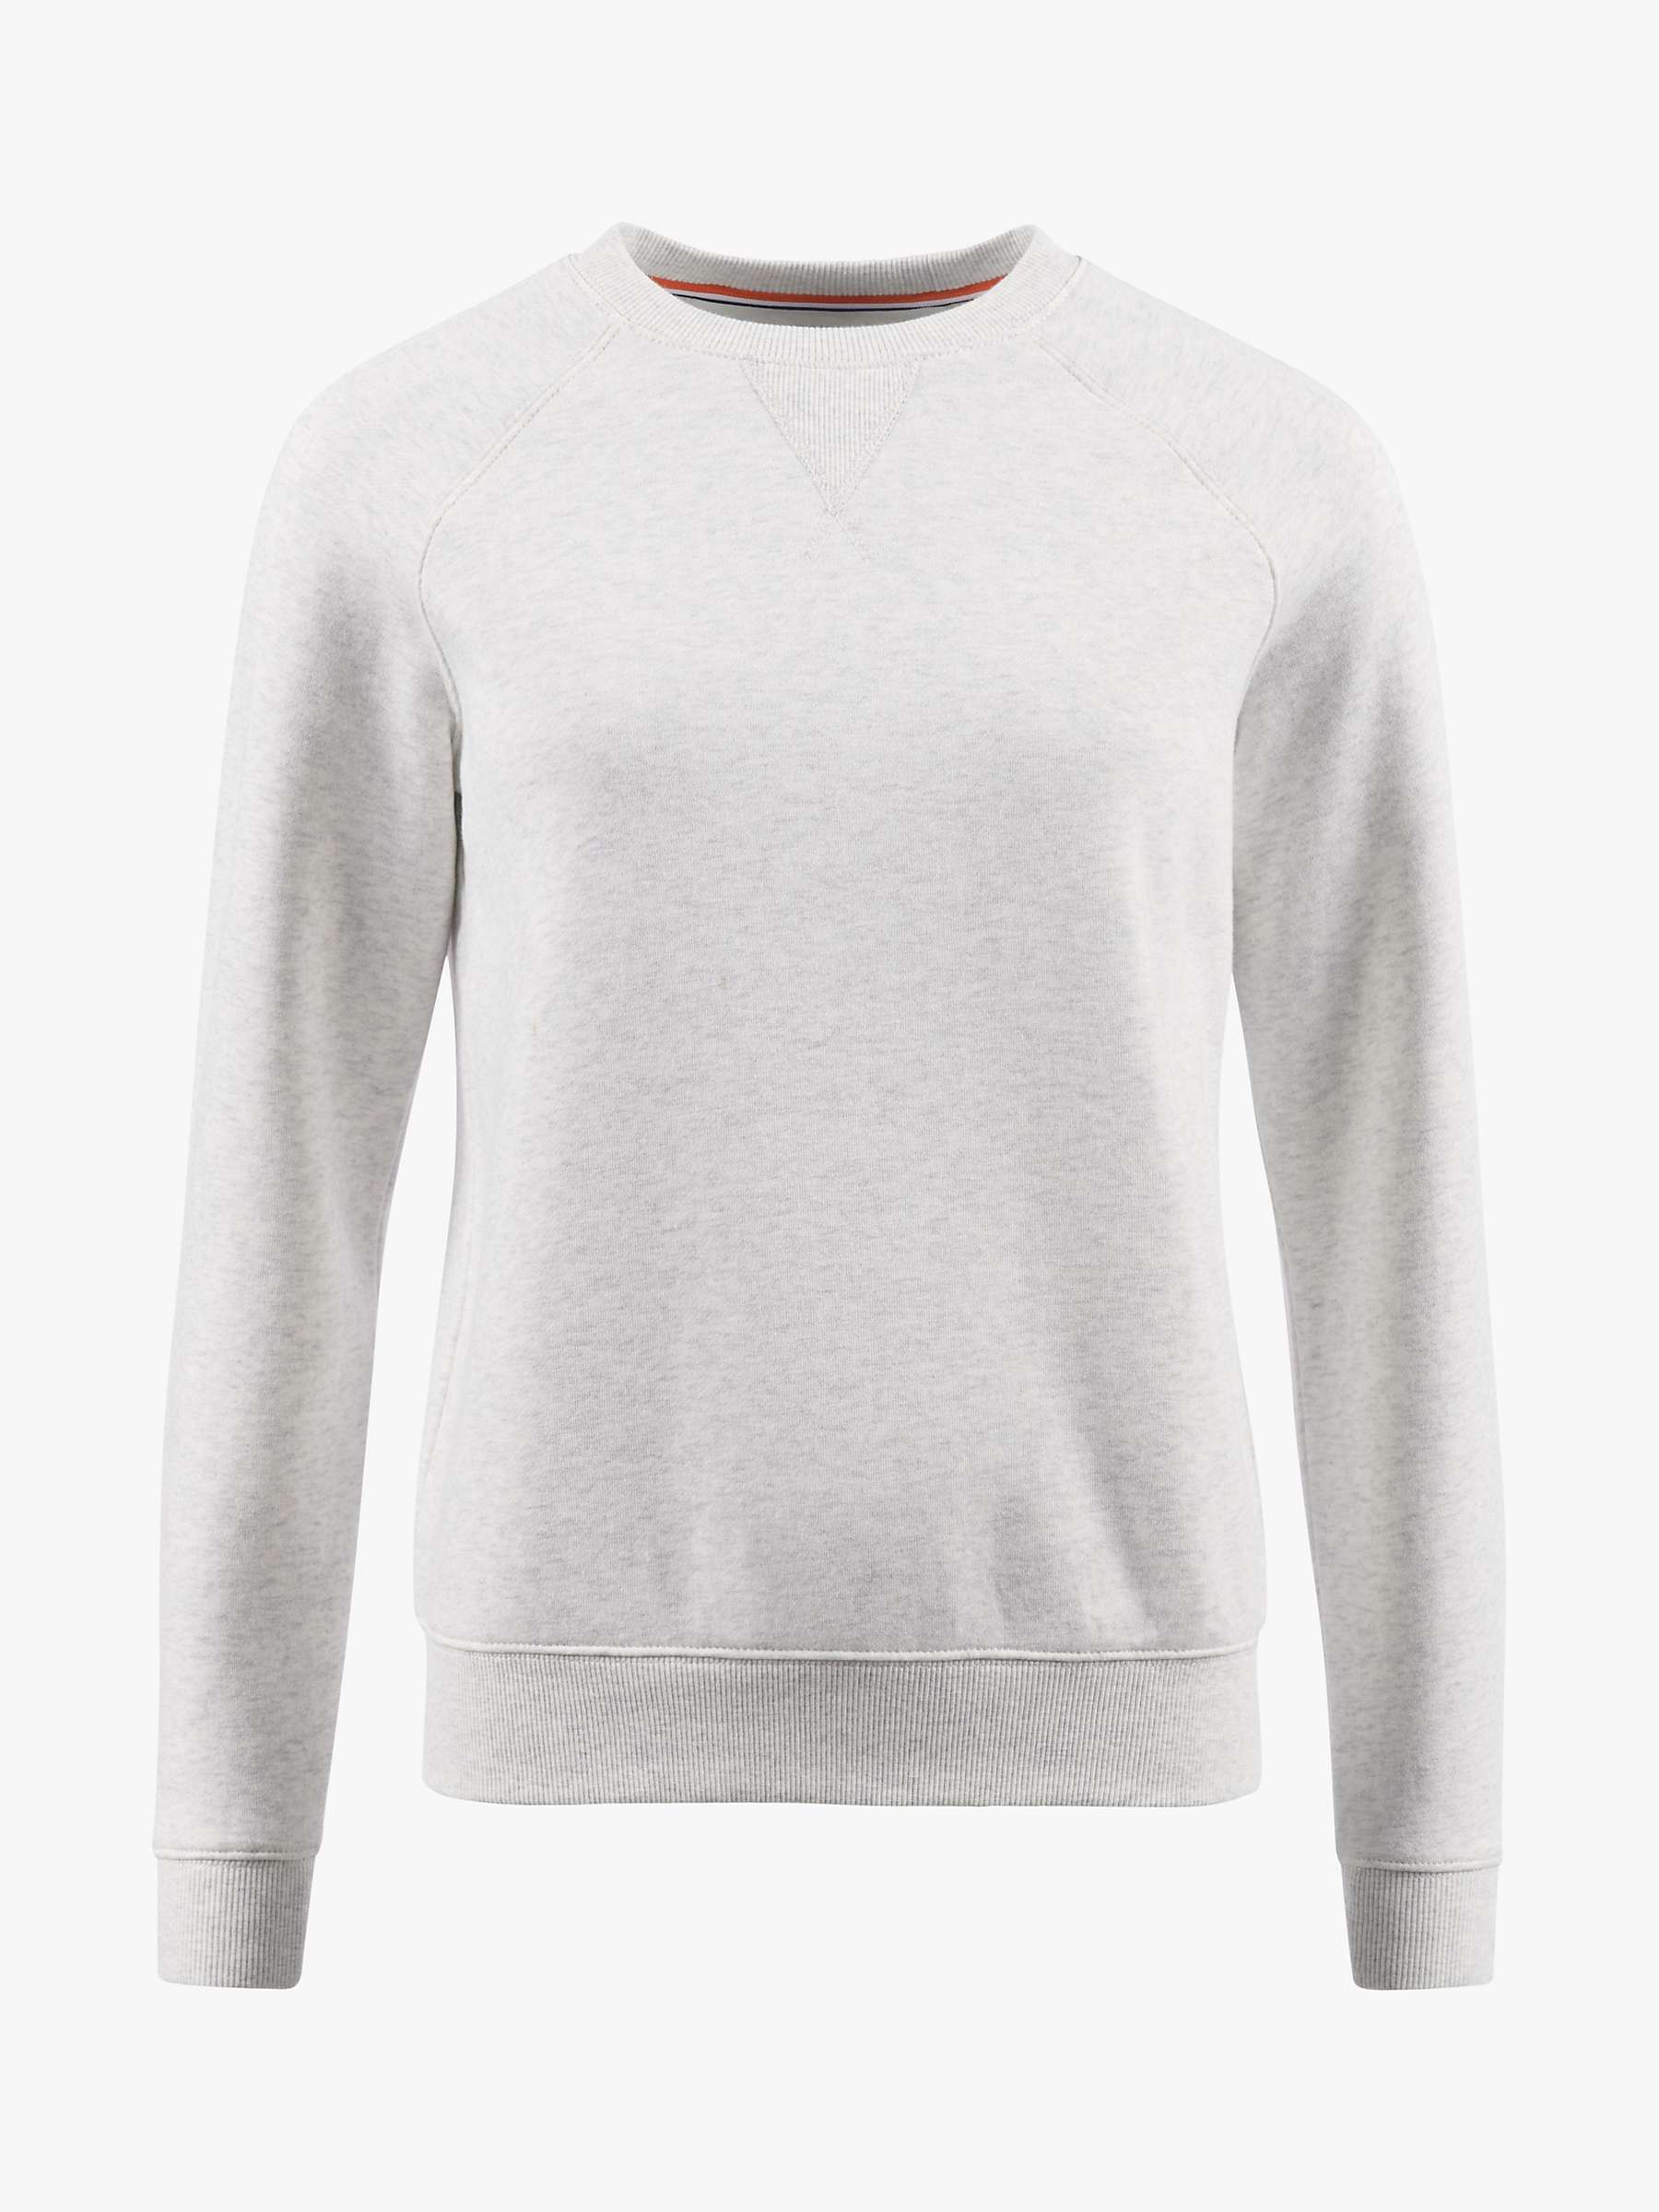 Buy Crew Clothing Brushed Back Sweatshirt Online at johnlewis.com